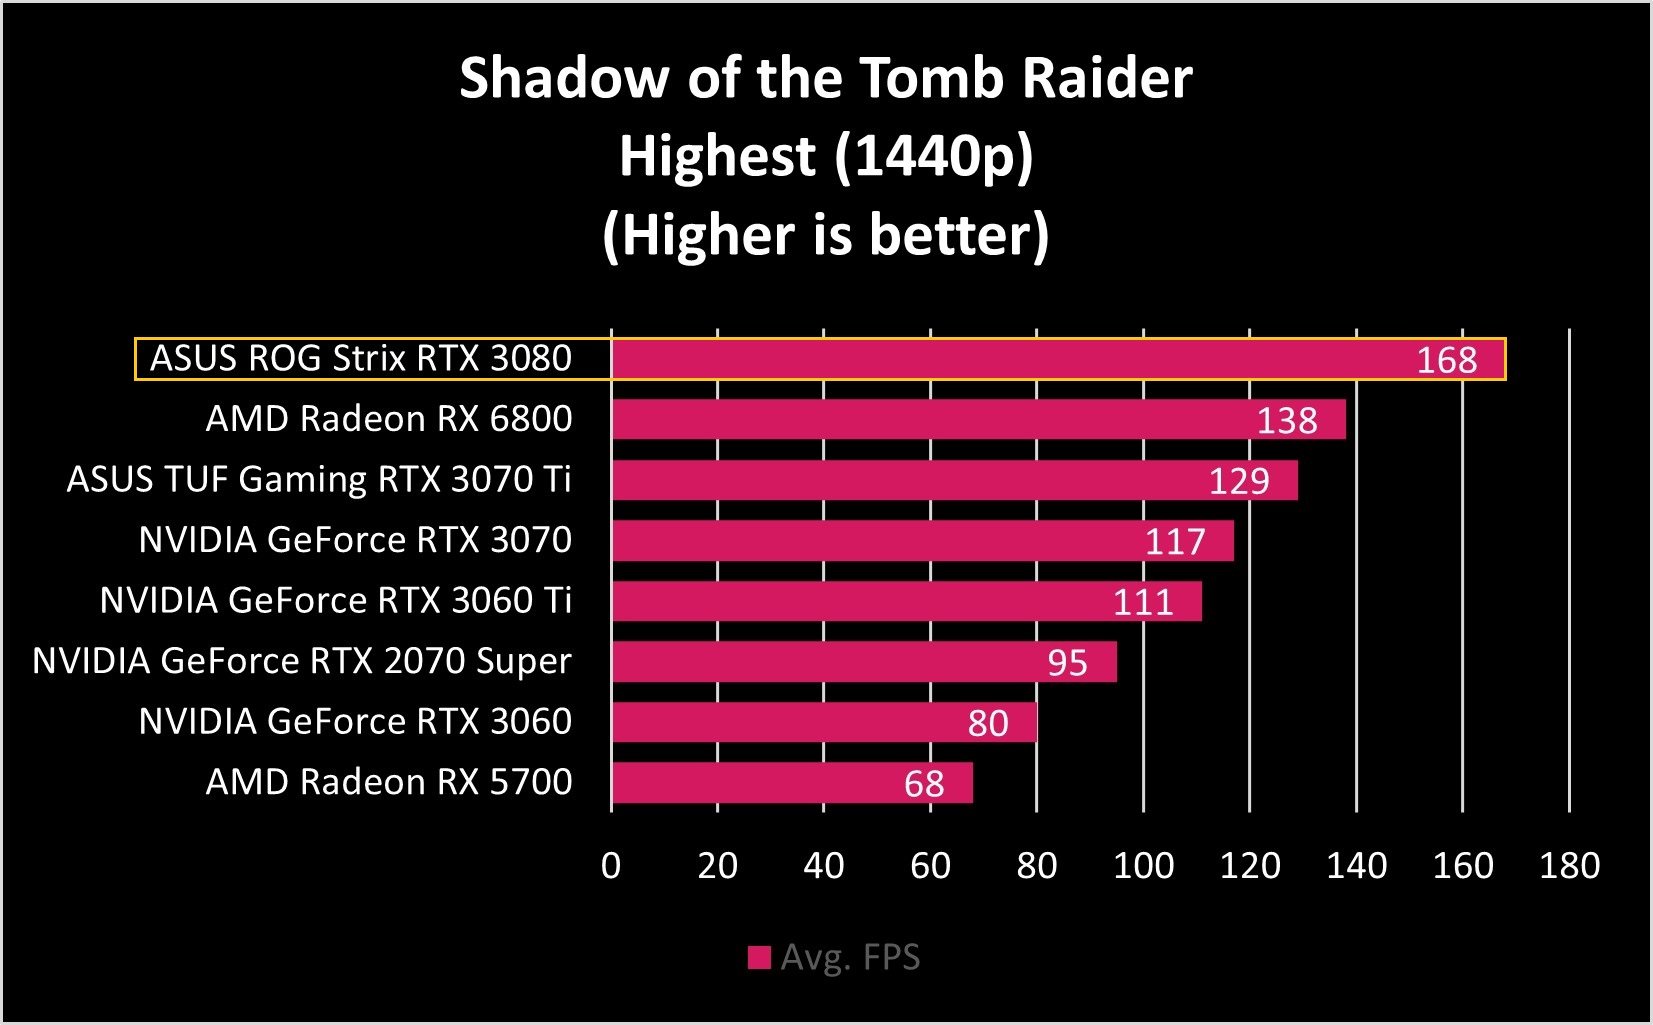 ASUS ROG Strix RTX 3080 Tomb Raider